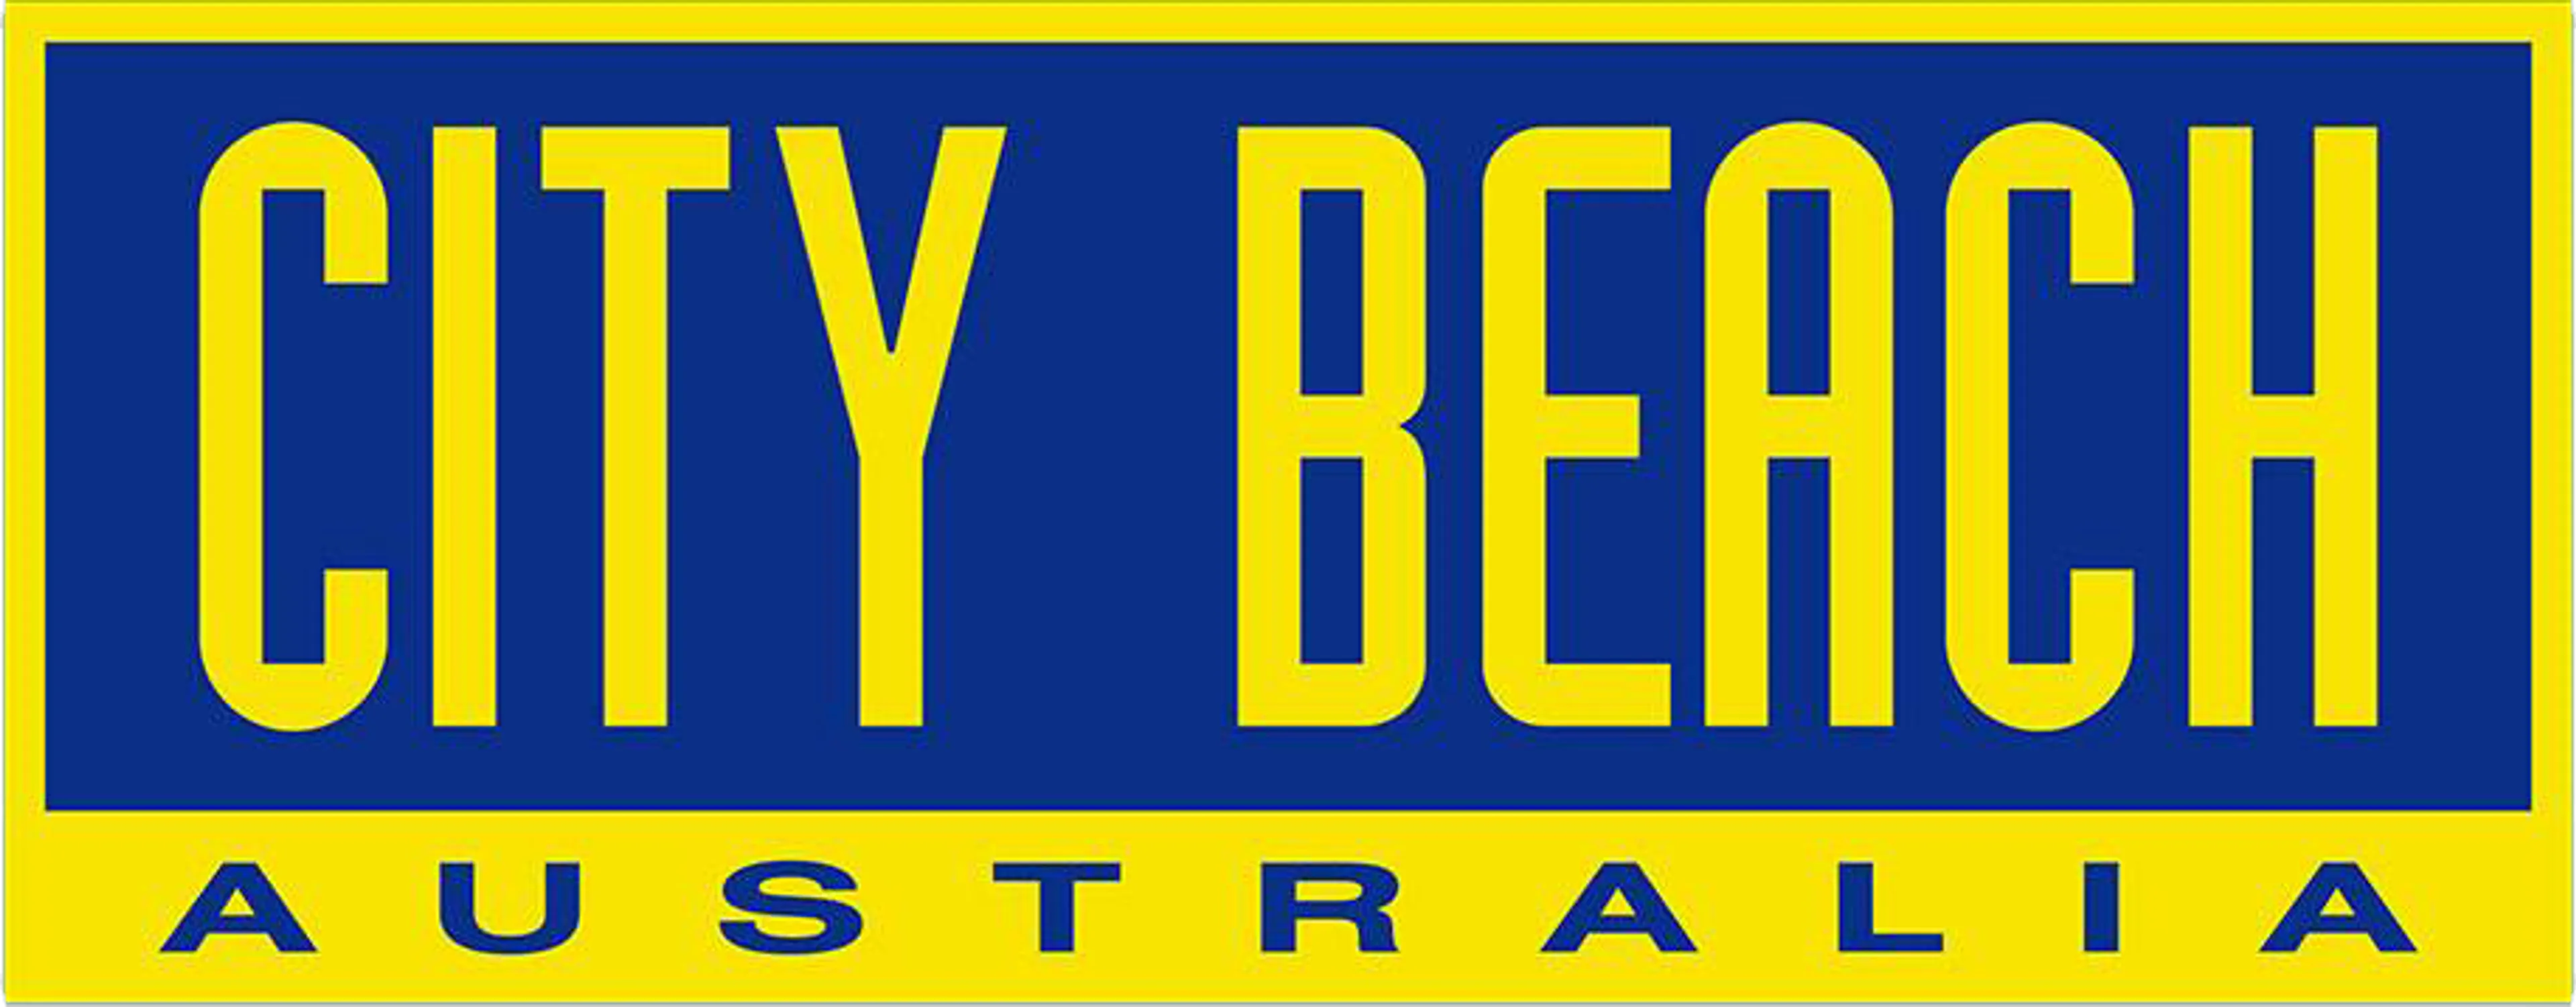 CITY BEACH logo